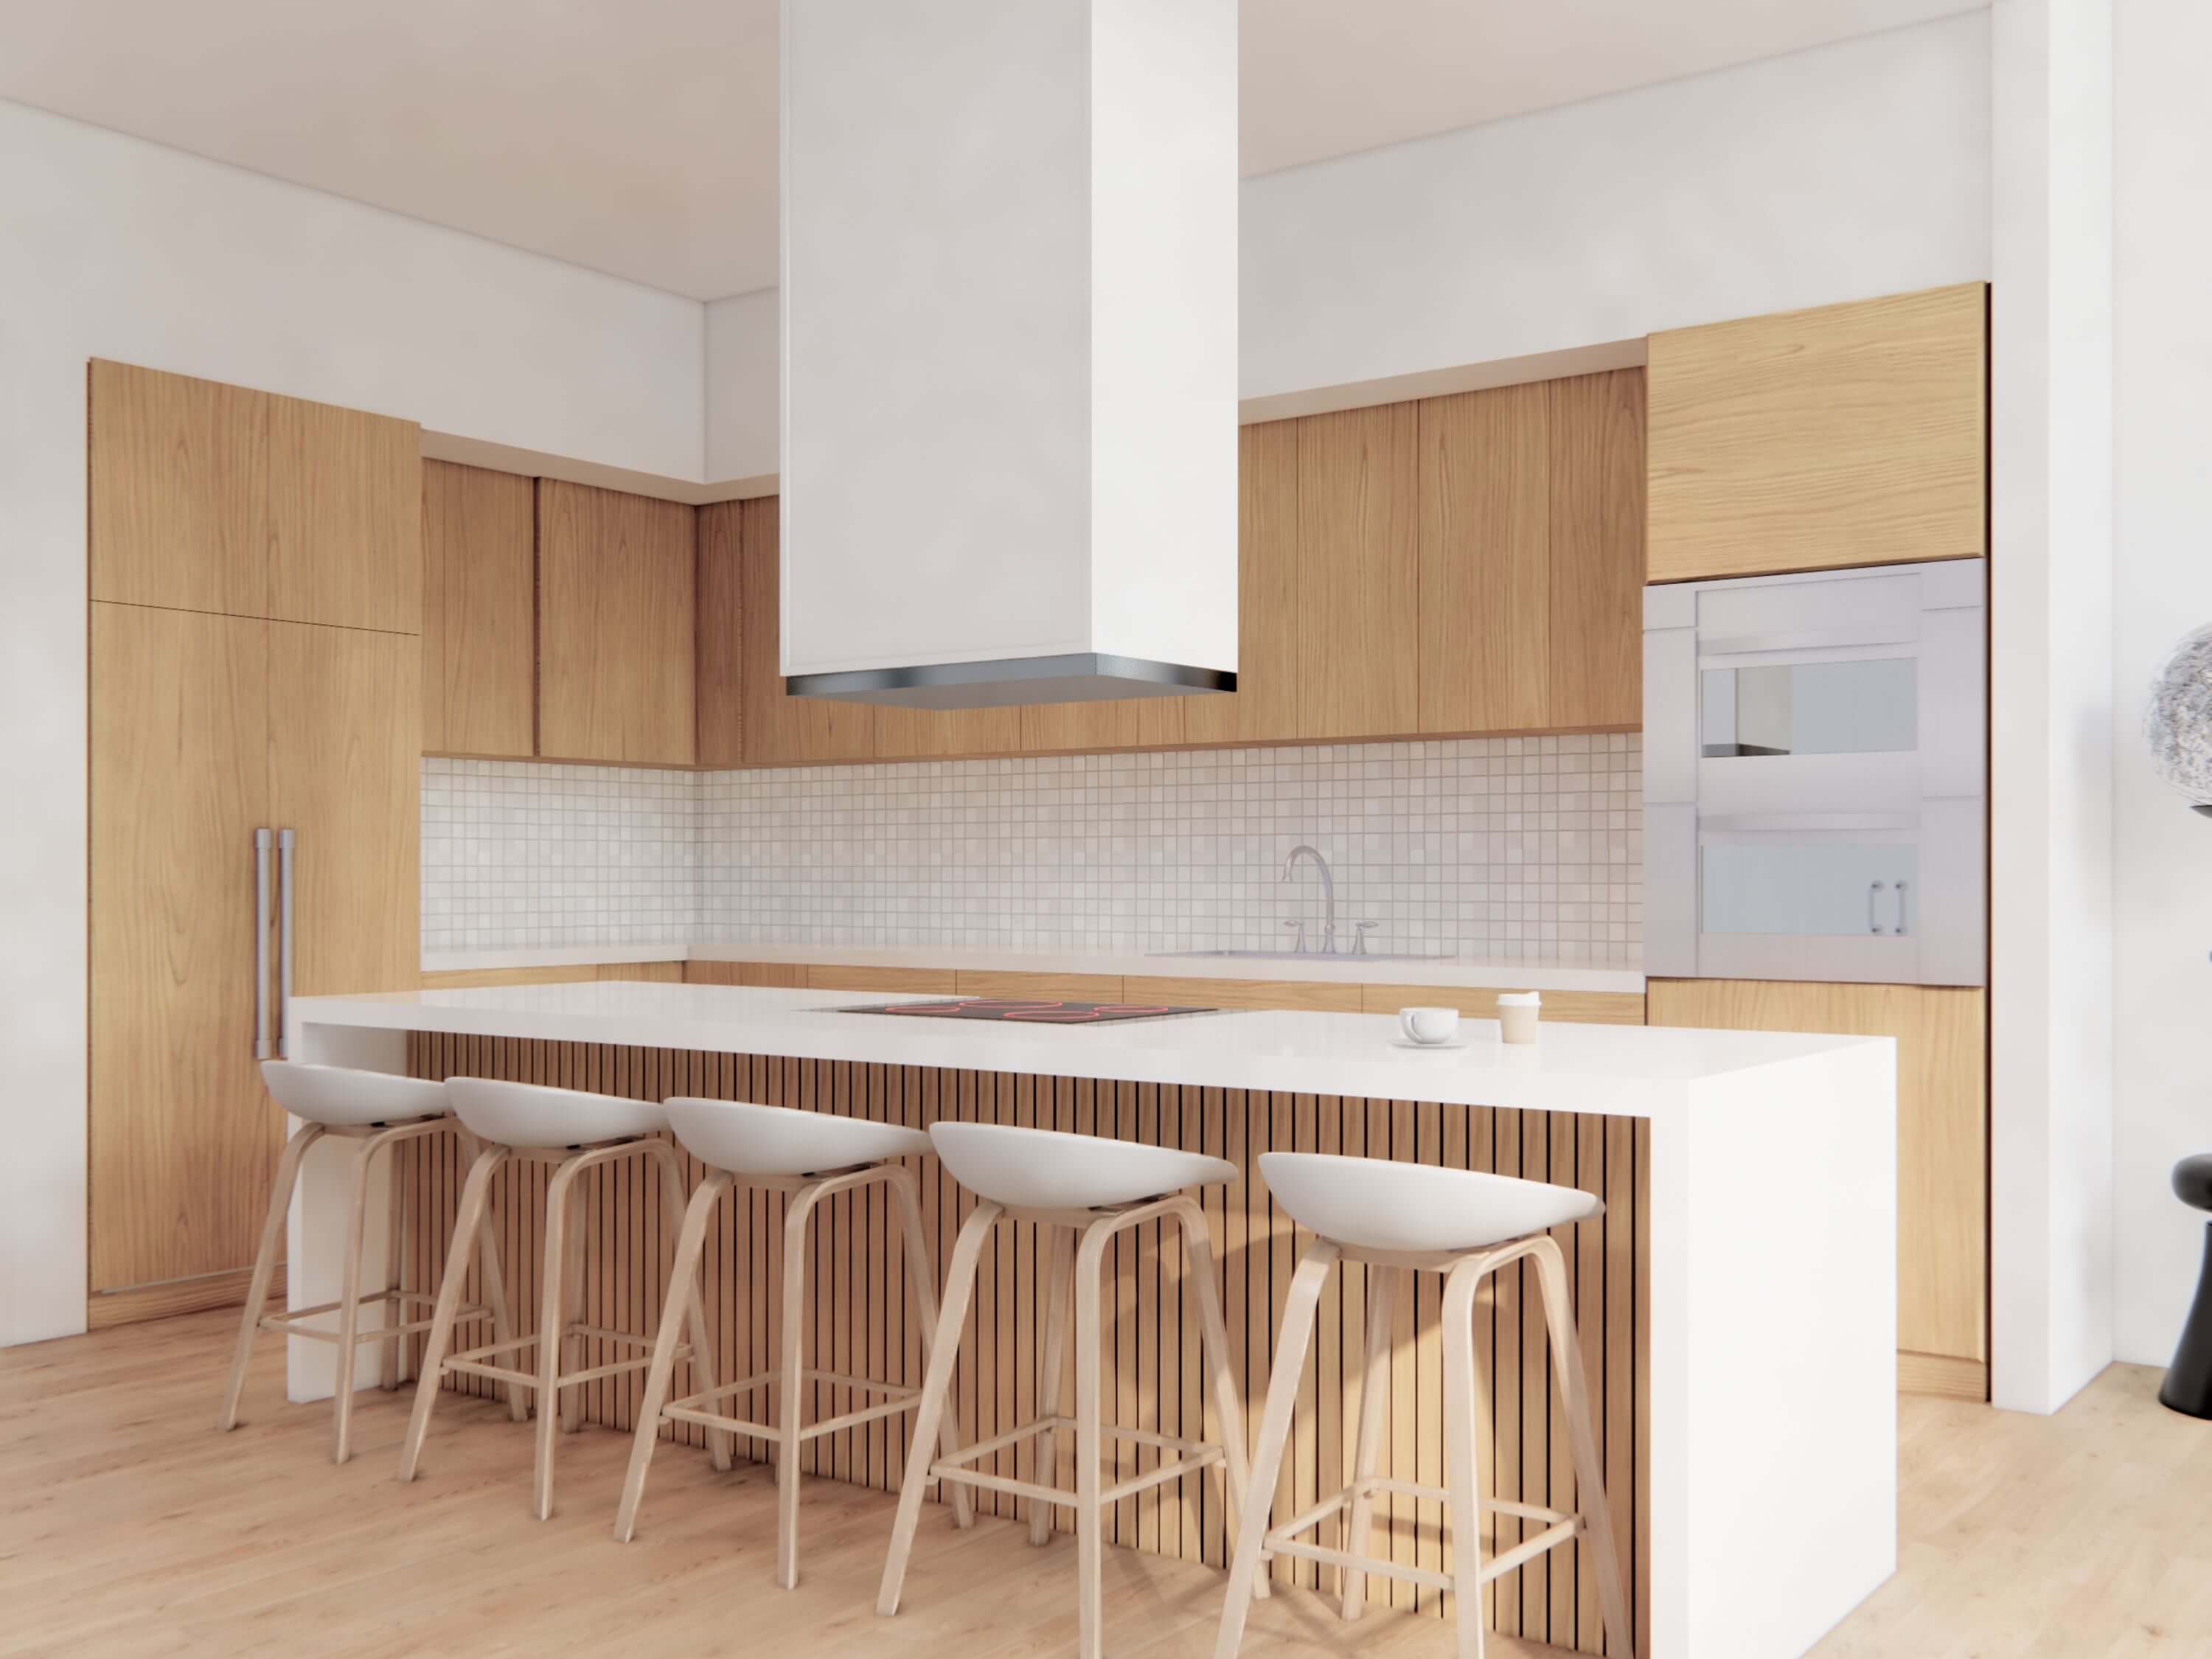 amazing barndominium interior designs: DWF 5BD Nordic Barndo Kitchen